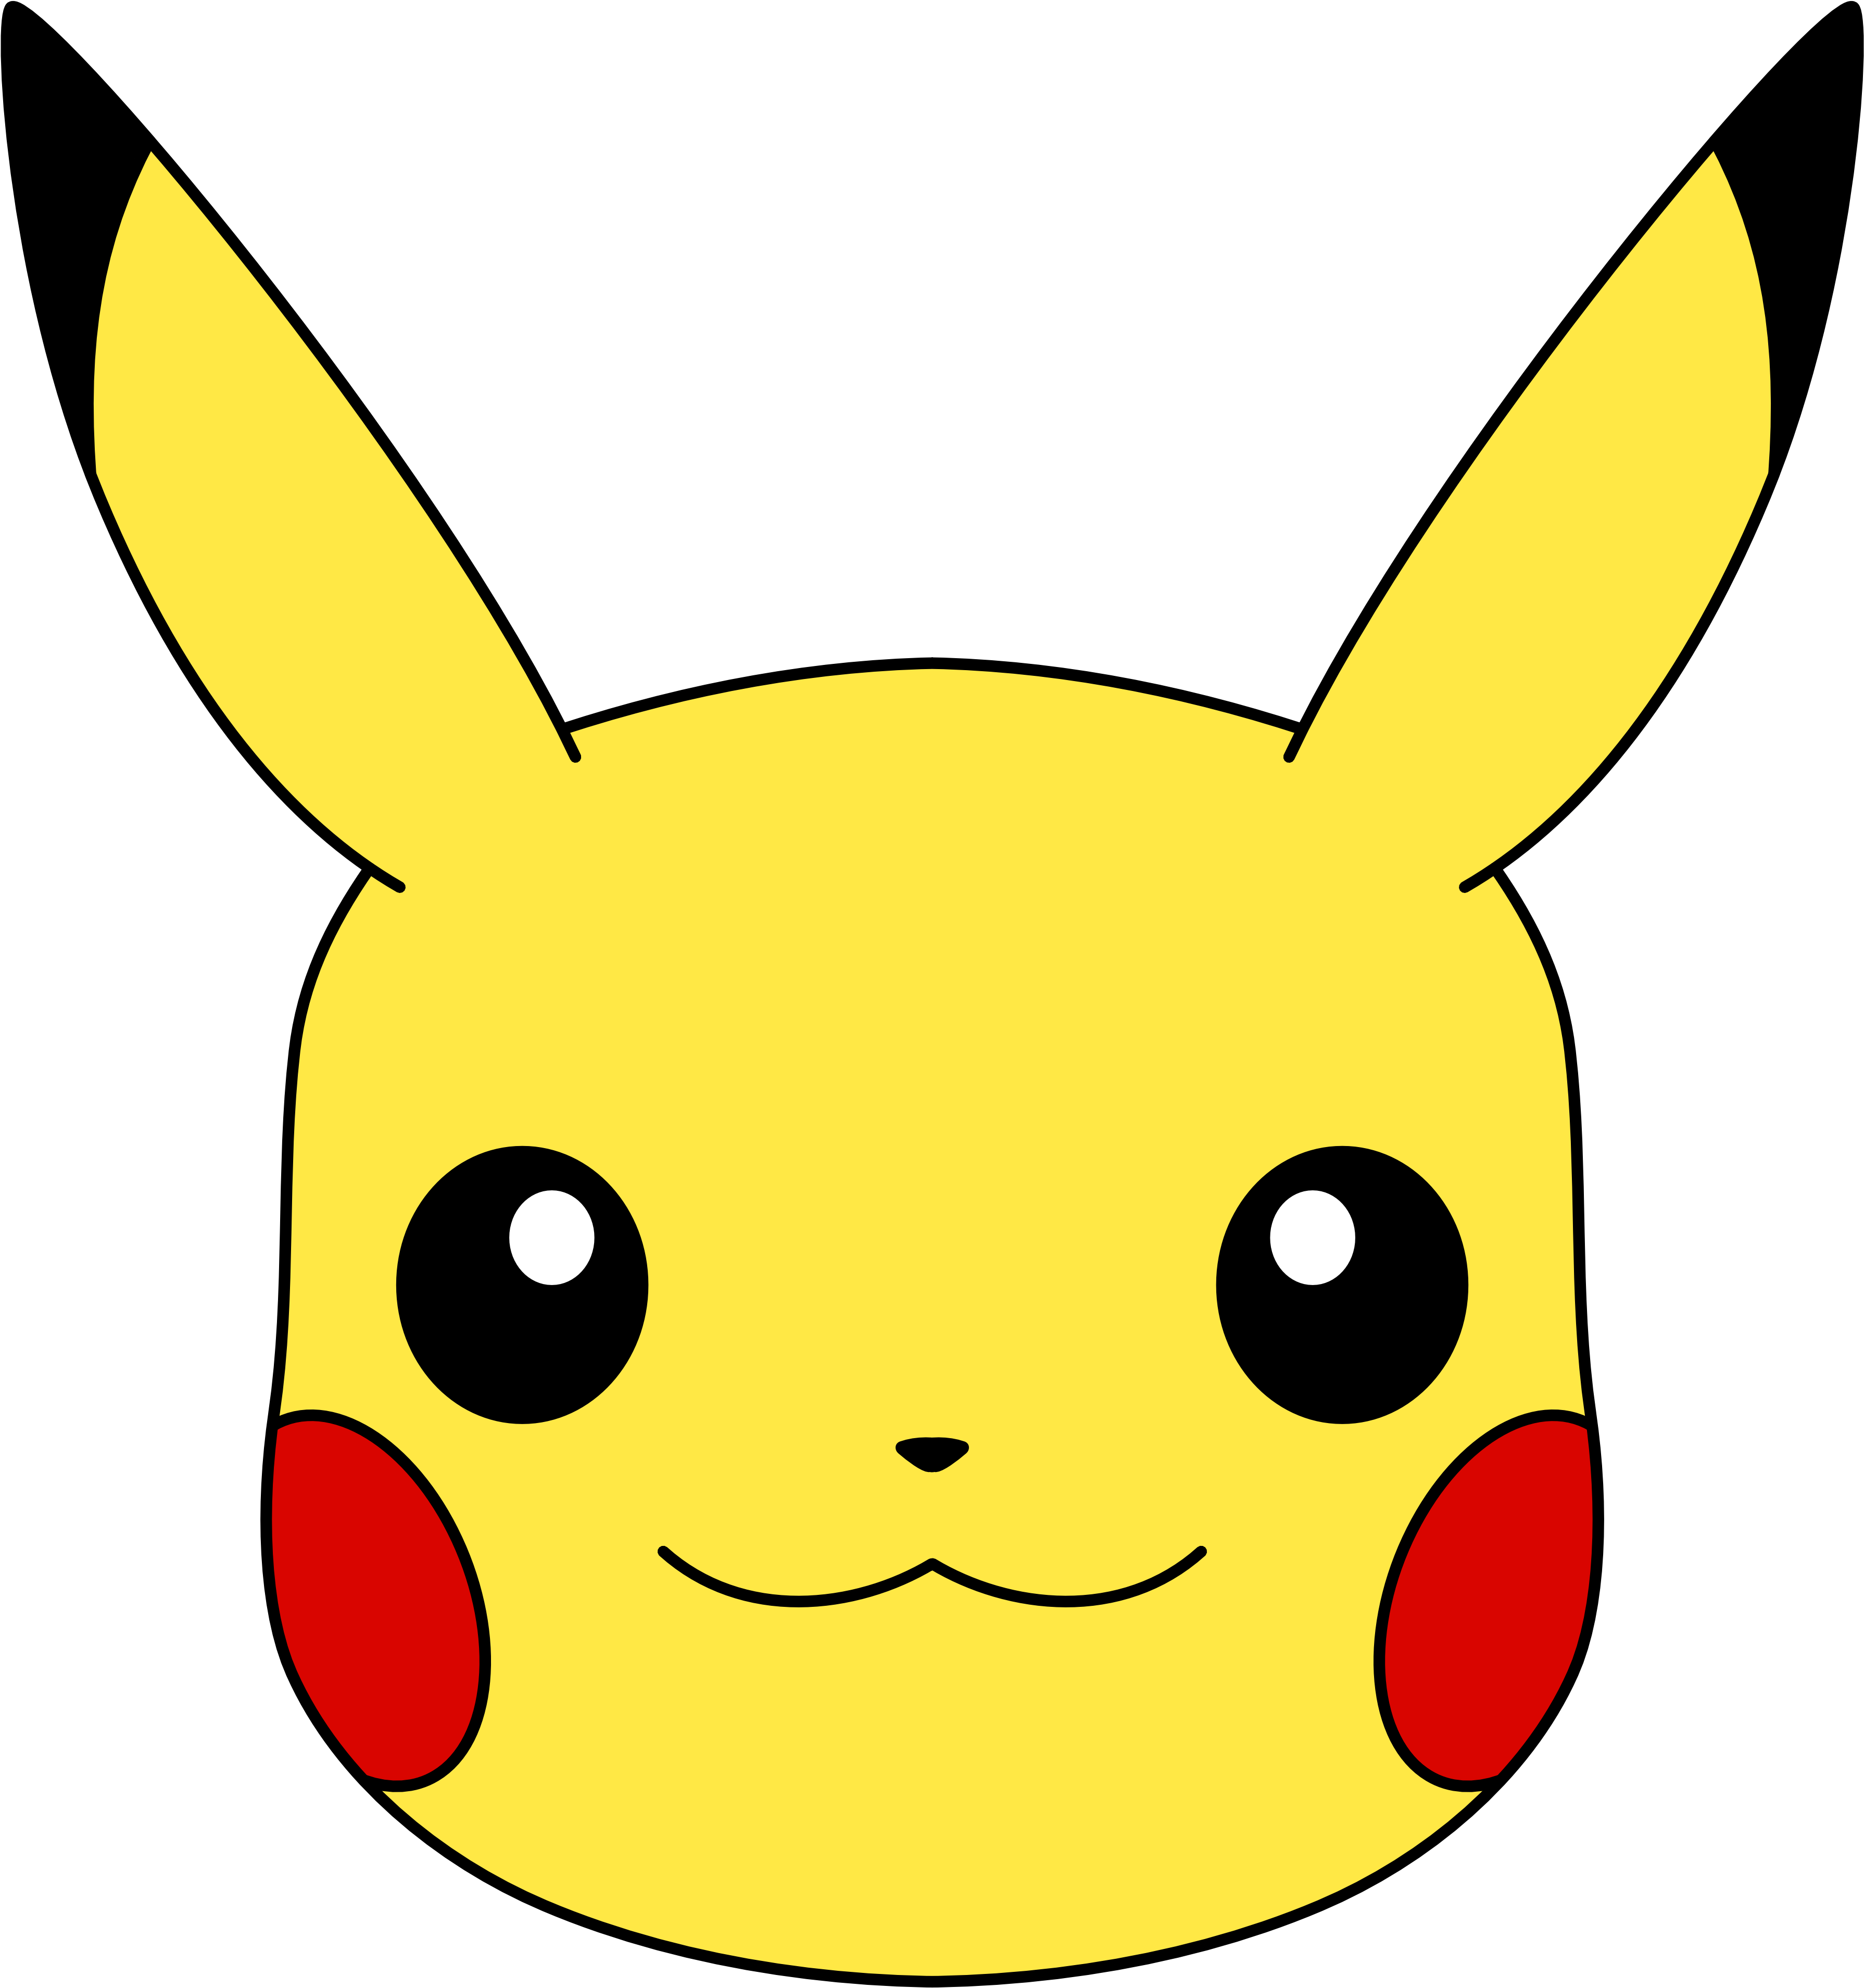 Pikachu Meme PNG Pic